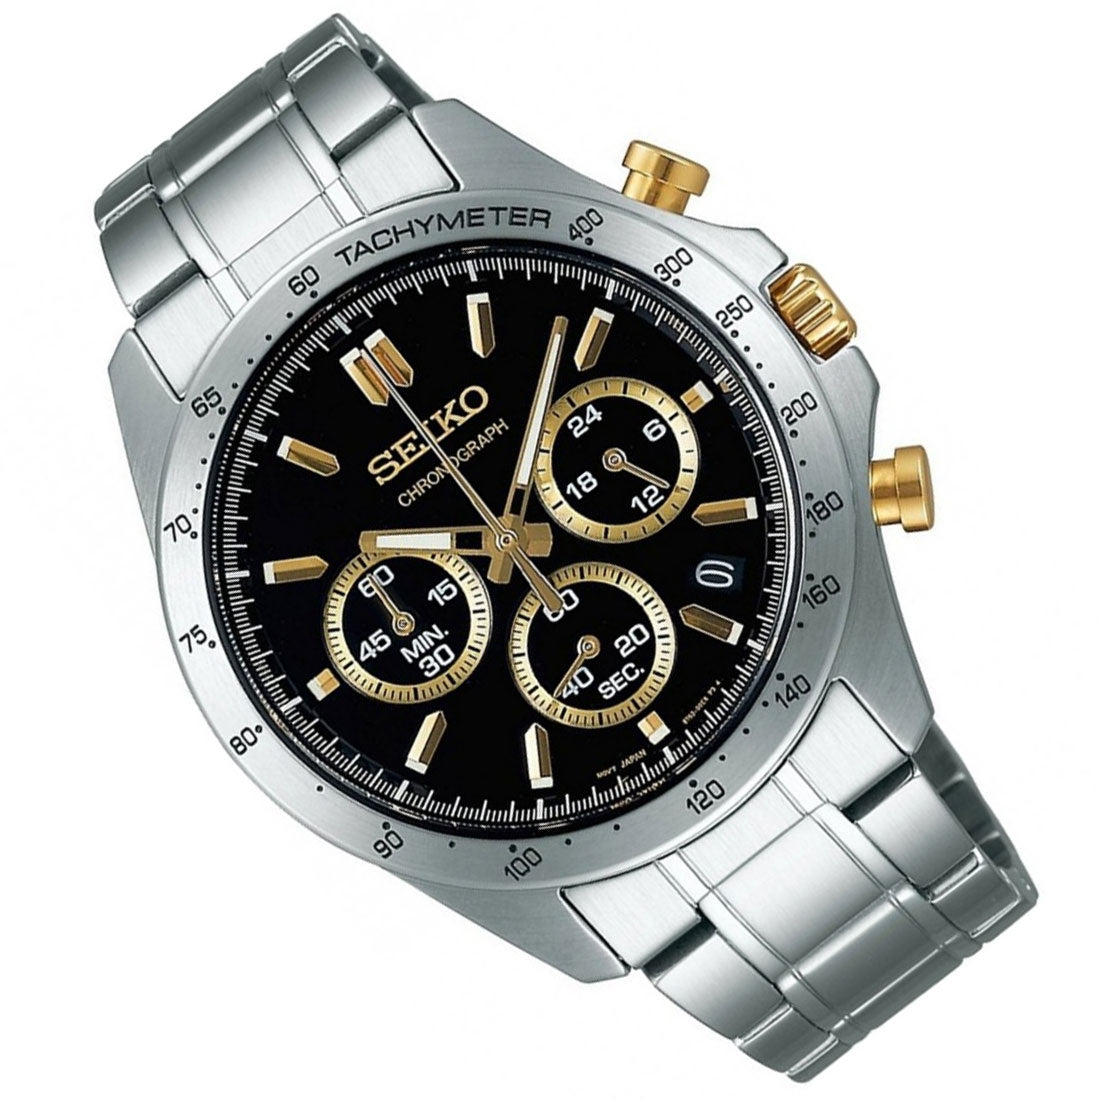 Seiko Spirit JDM Selection SBTR015 Black Gold Dial Quartz Chronograph Watch